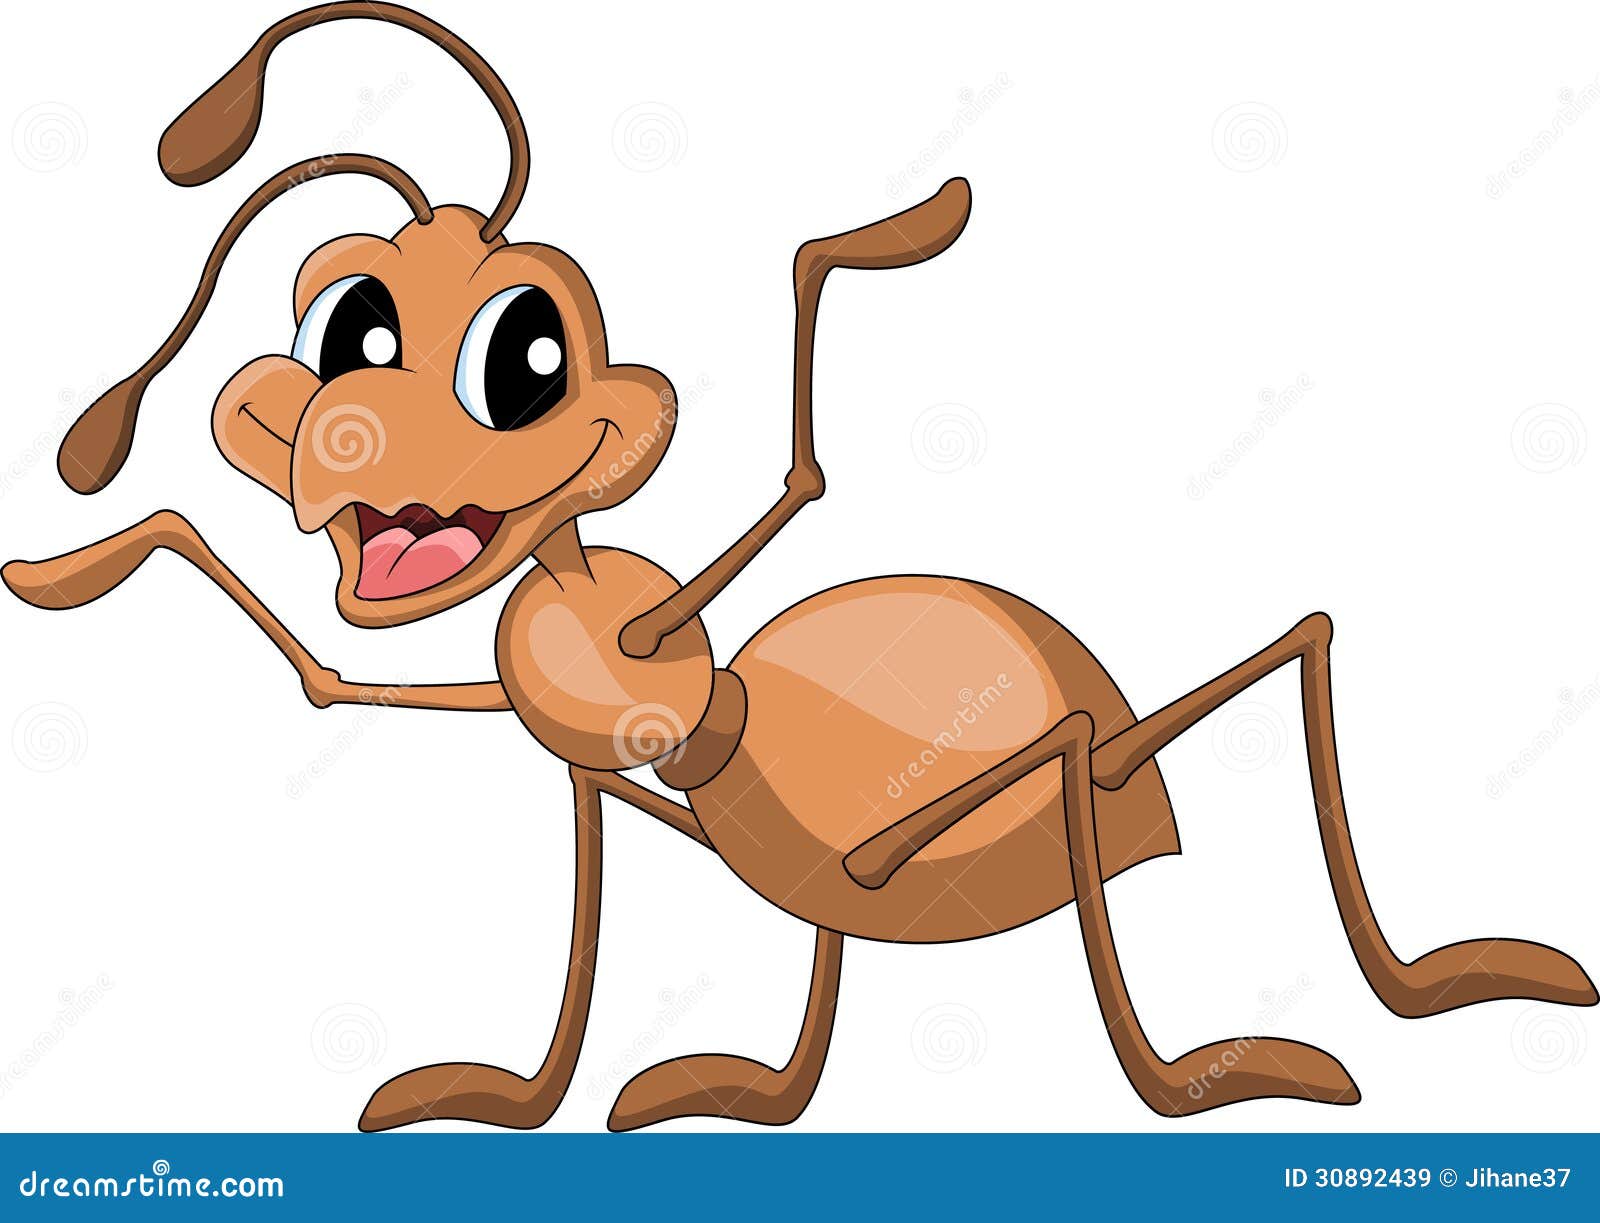 Cute ant cartoon stock illustration. Illustration of ...